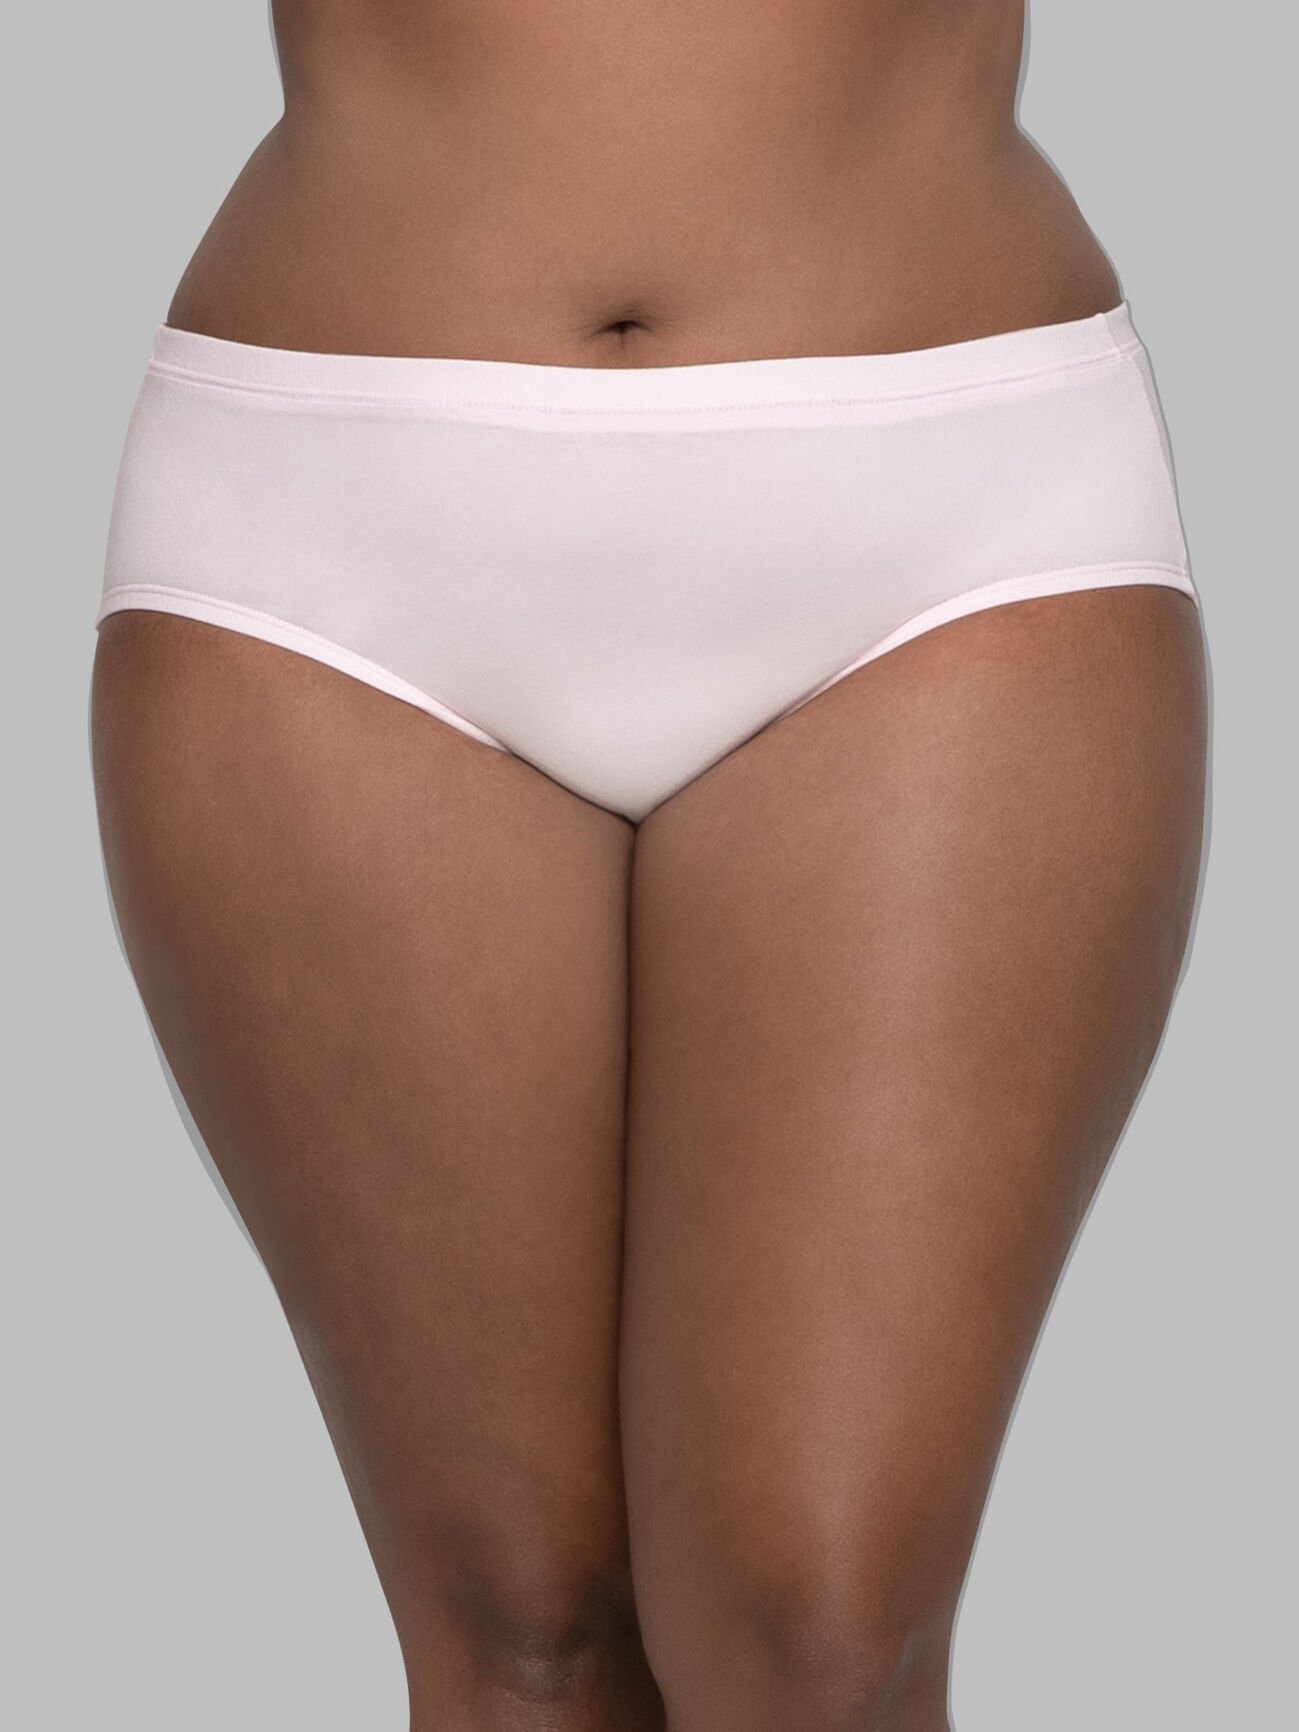 FEM Women's Seamless Panties Full Brief Underwear Designer Print - 3 Pack